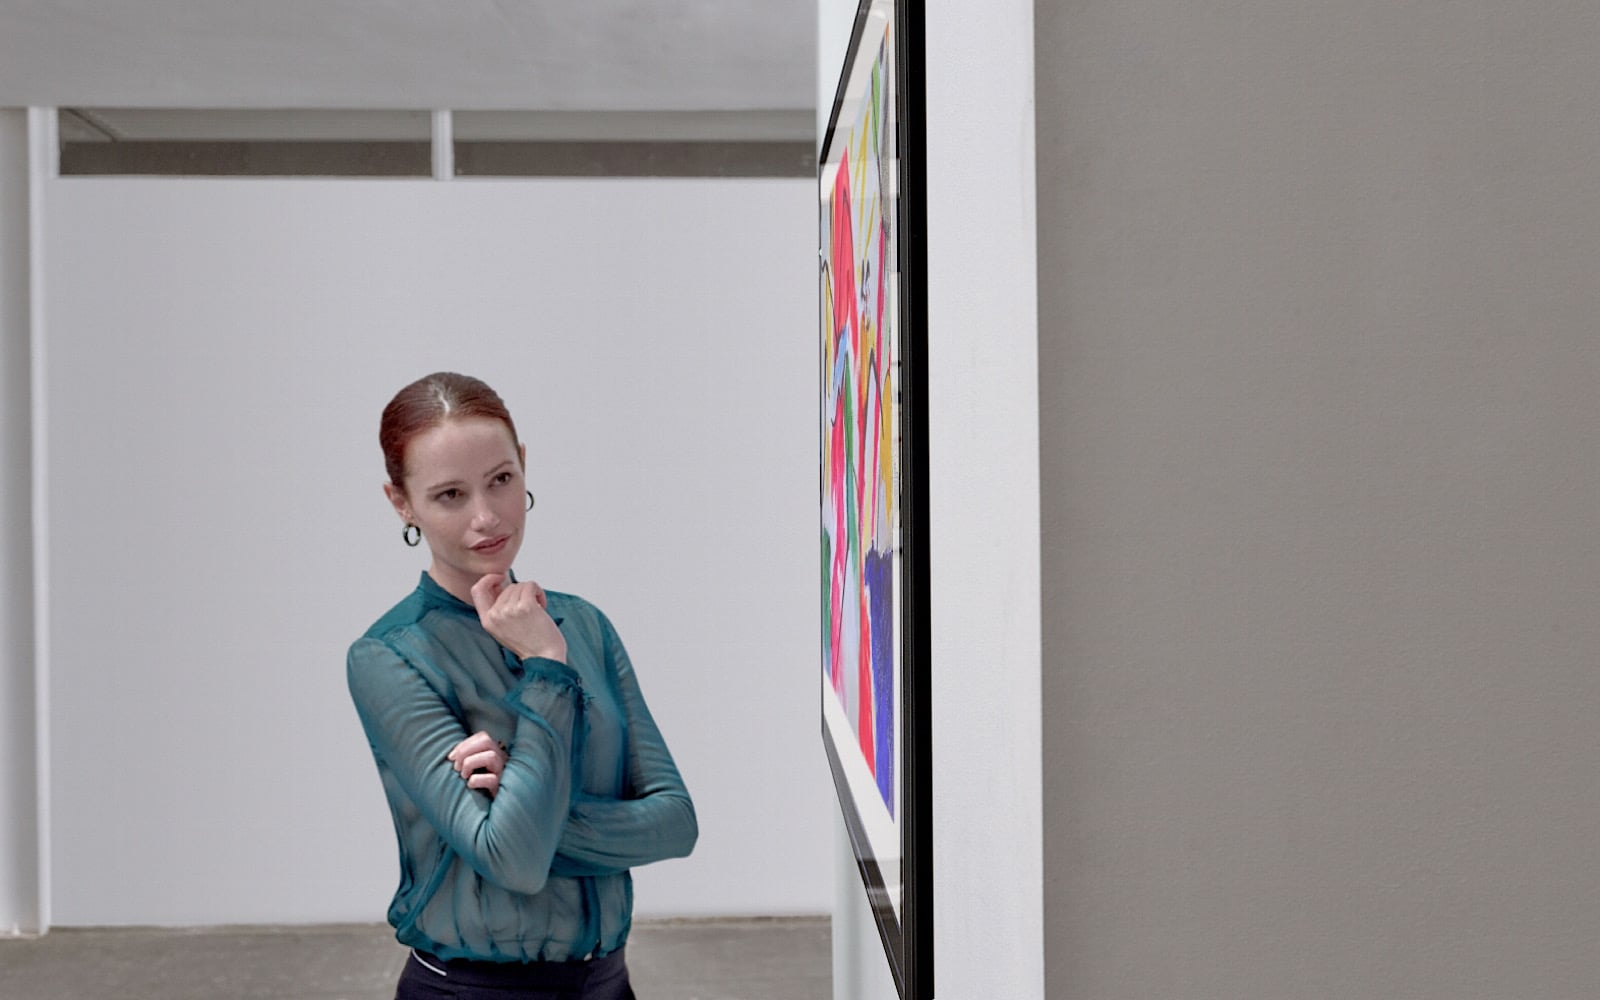 LG GX OLED Gallery TV (CES 2020)